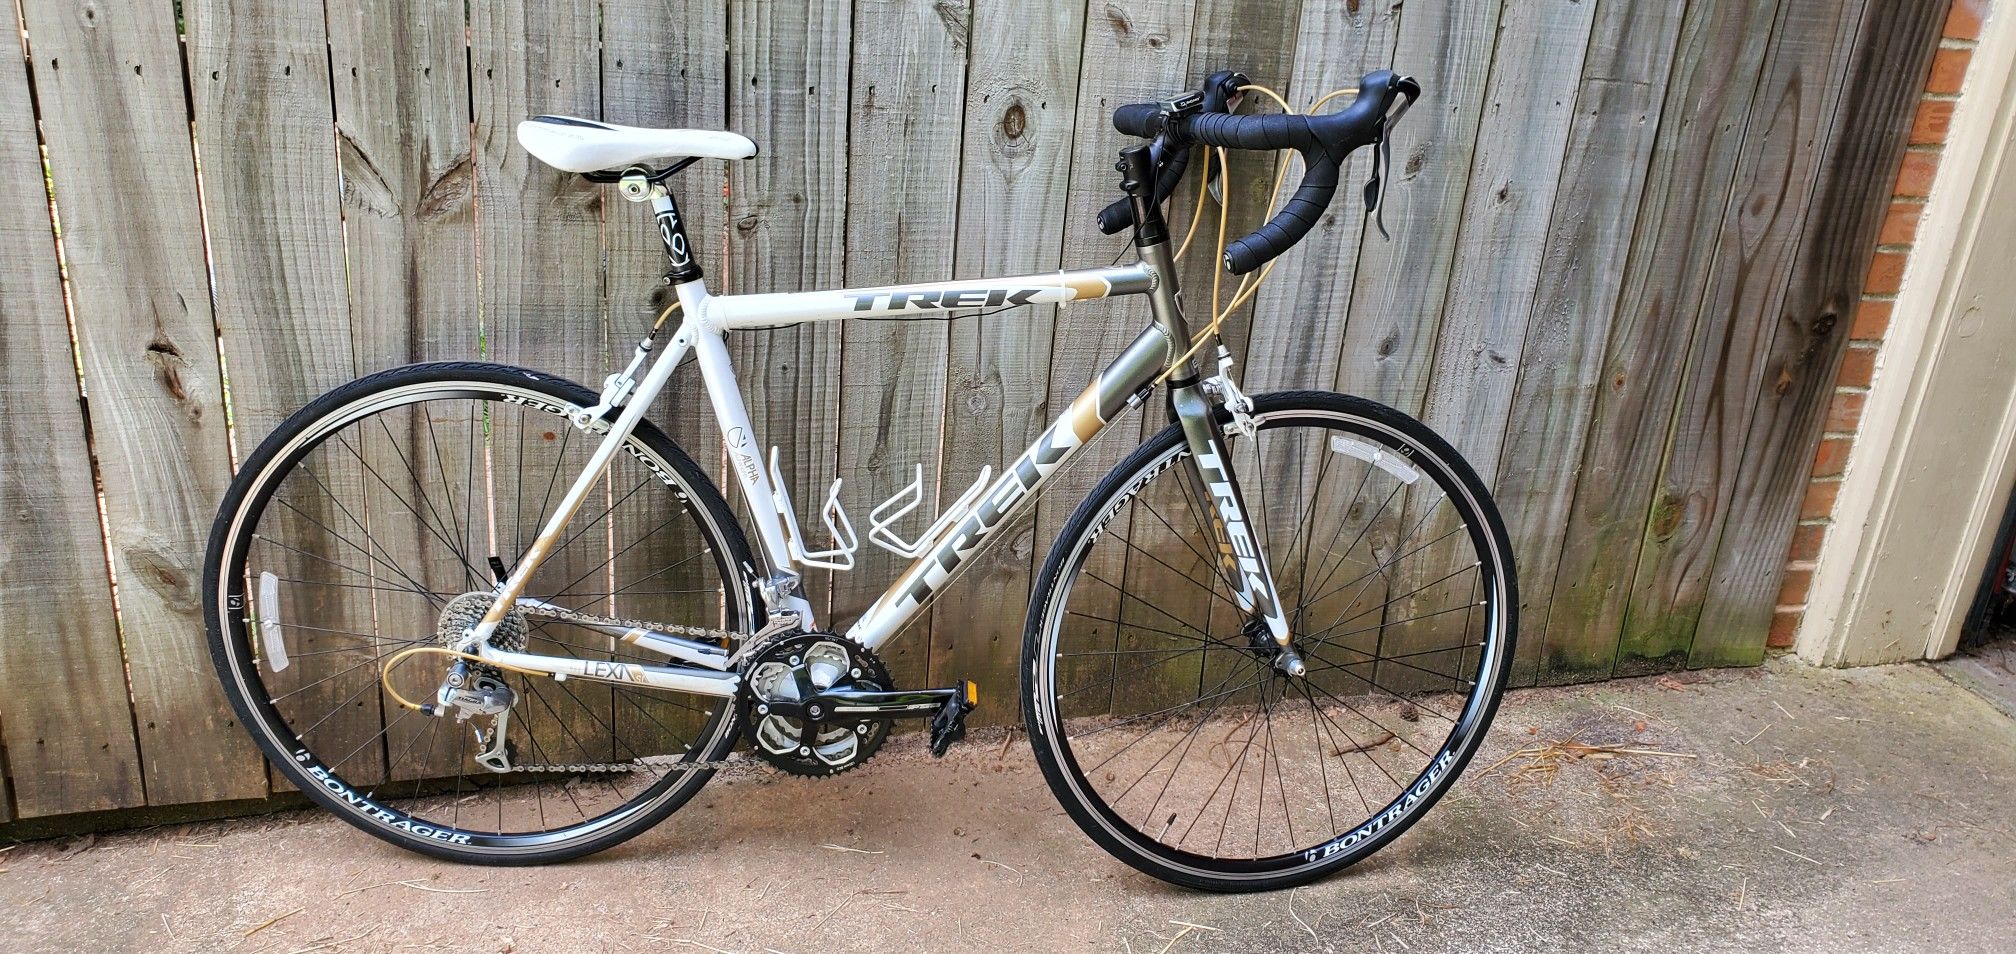 Trek Lexa SL Road Bike 54cm Tiagra, Excellent Condition w/ Upgrades